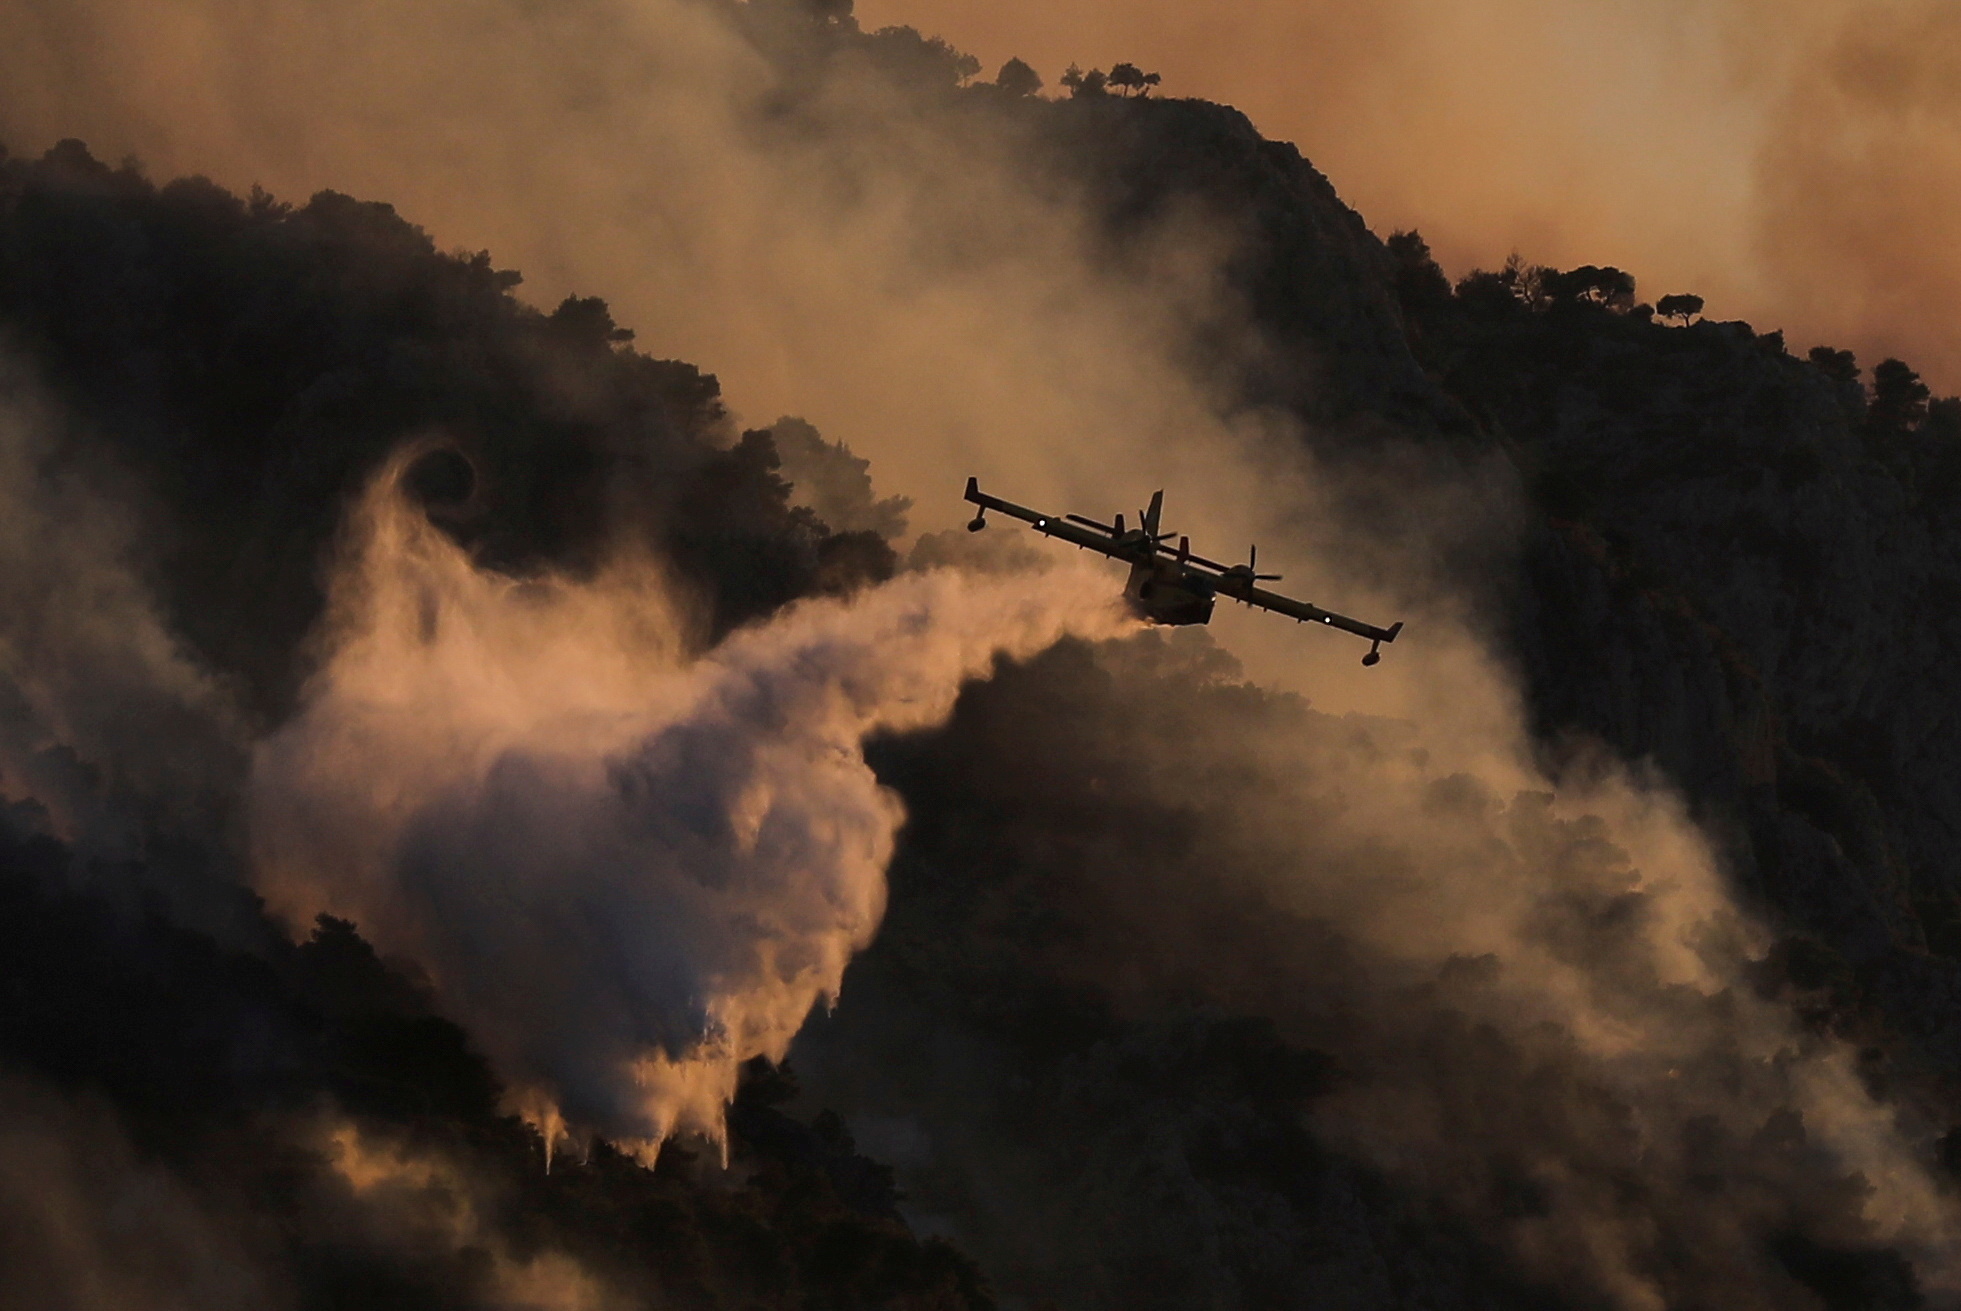 Wildfire near the village of Kechries, Greece